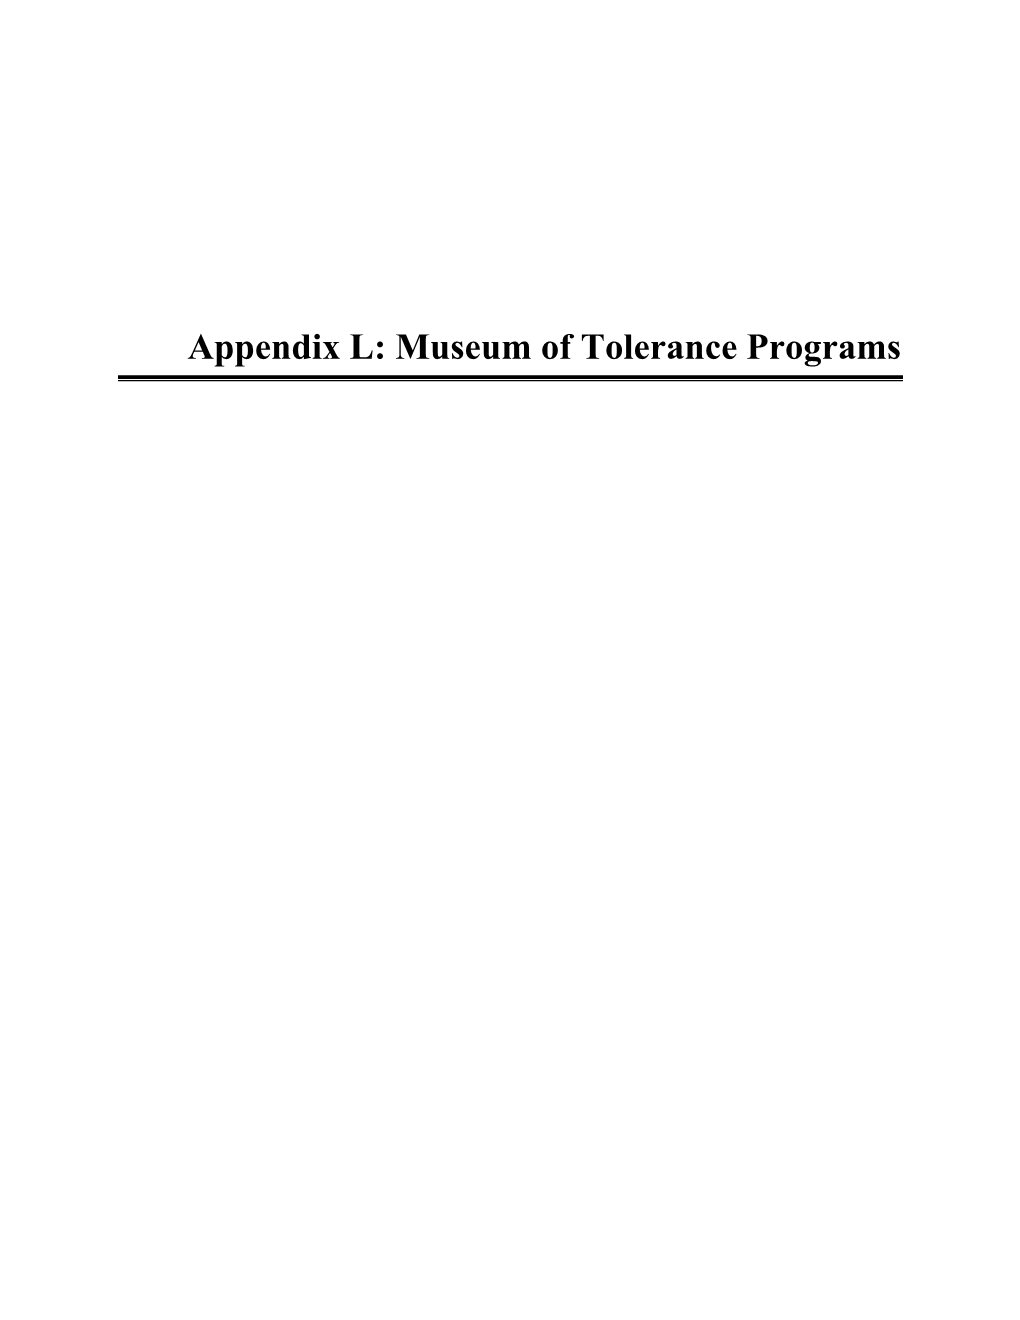 Museum of Tolerance Programs